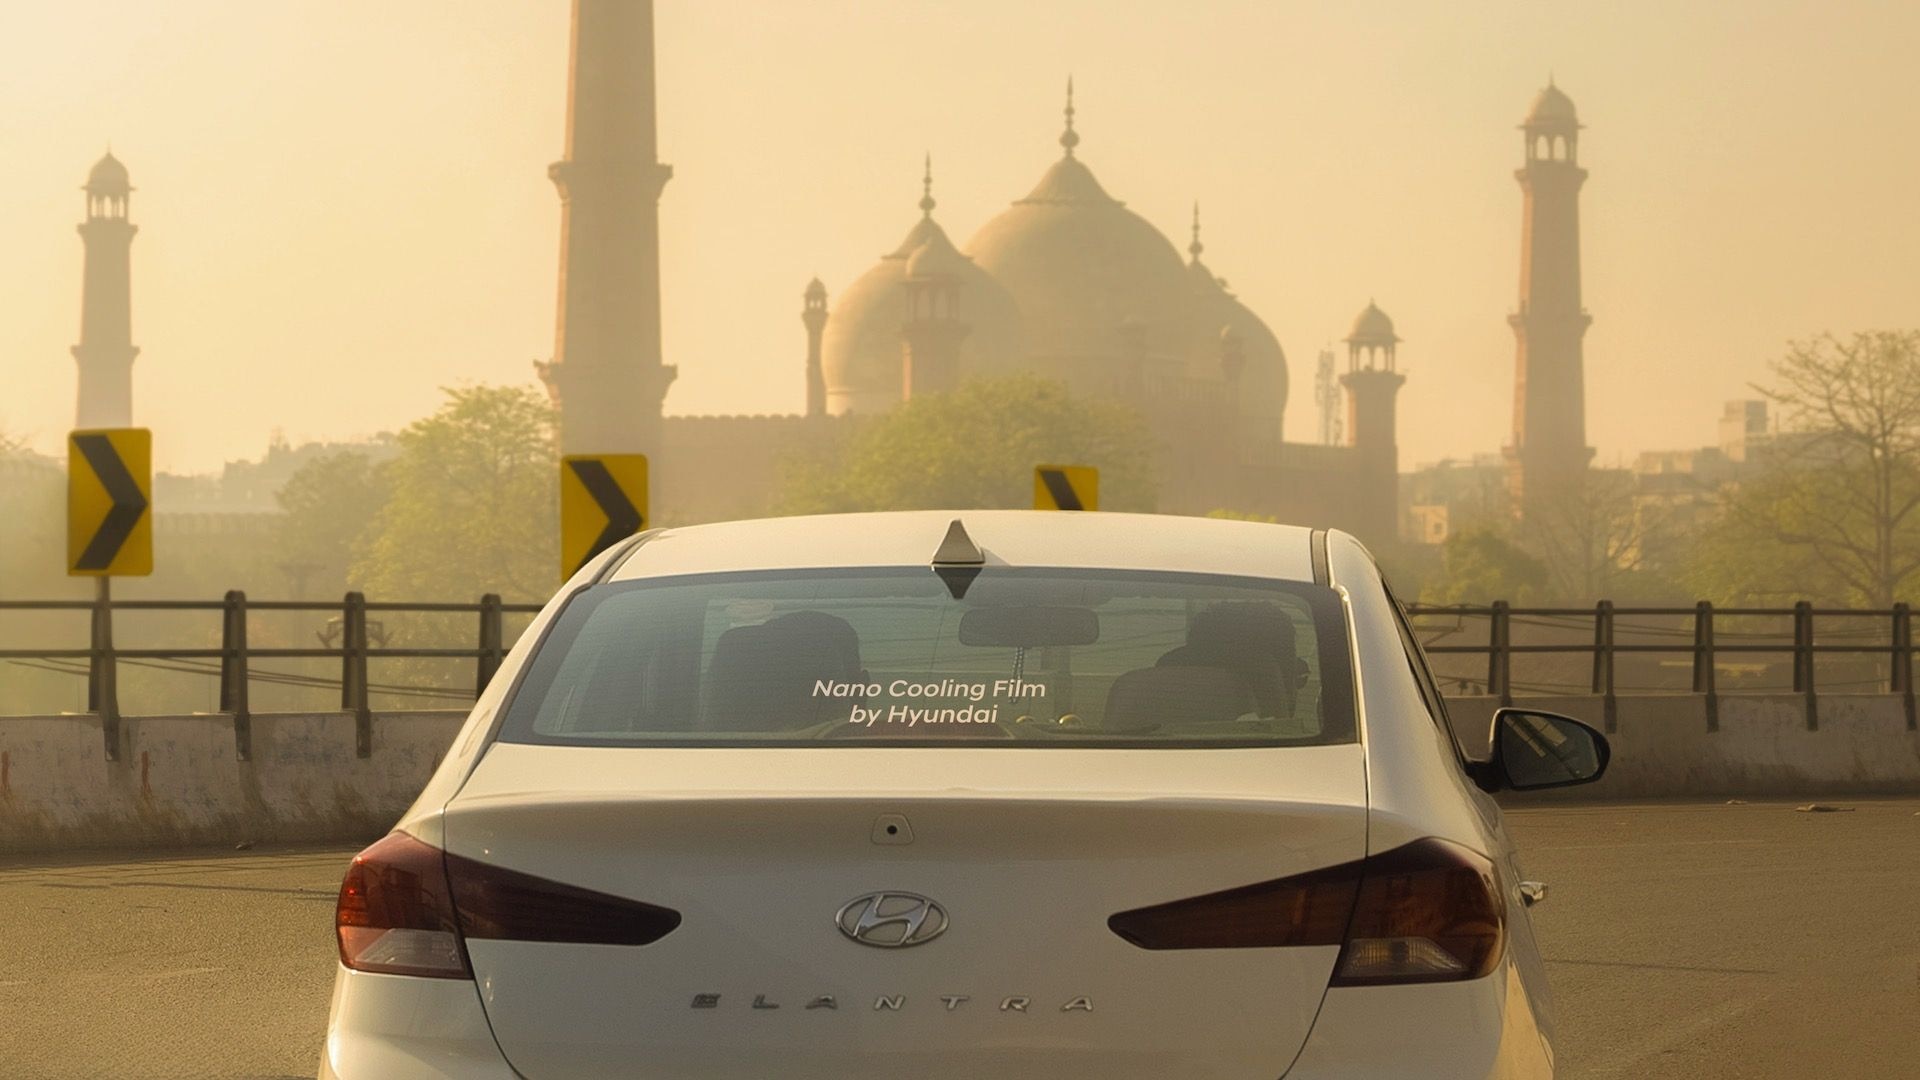 Hyundai Nano Cooling Film window tint tested in Lahore, Pakistan